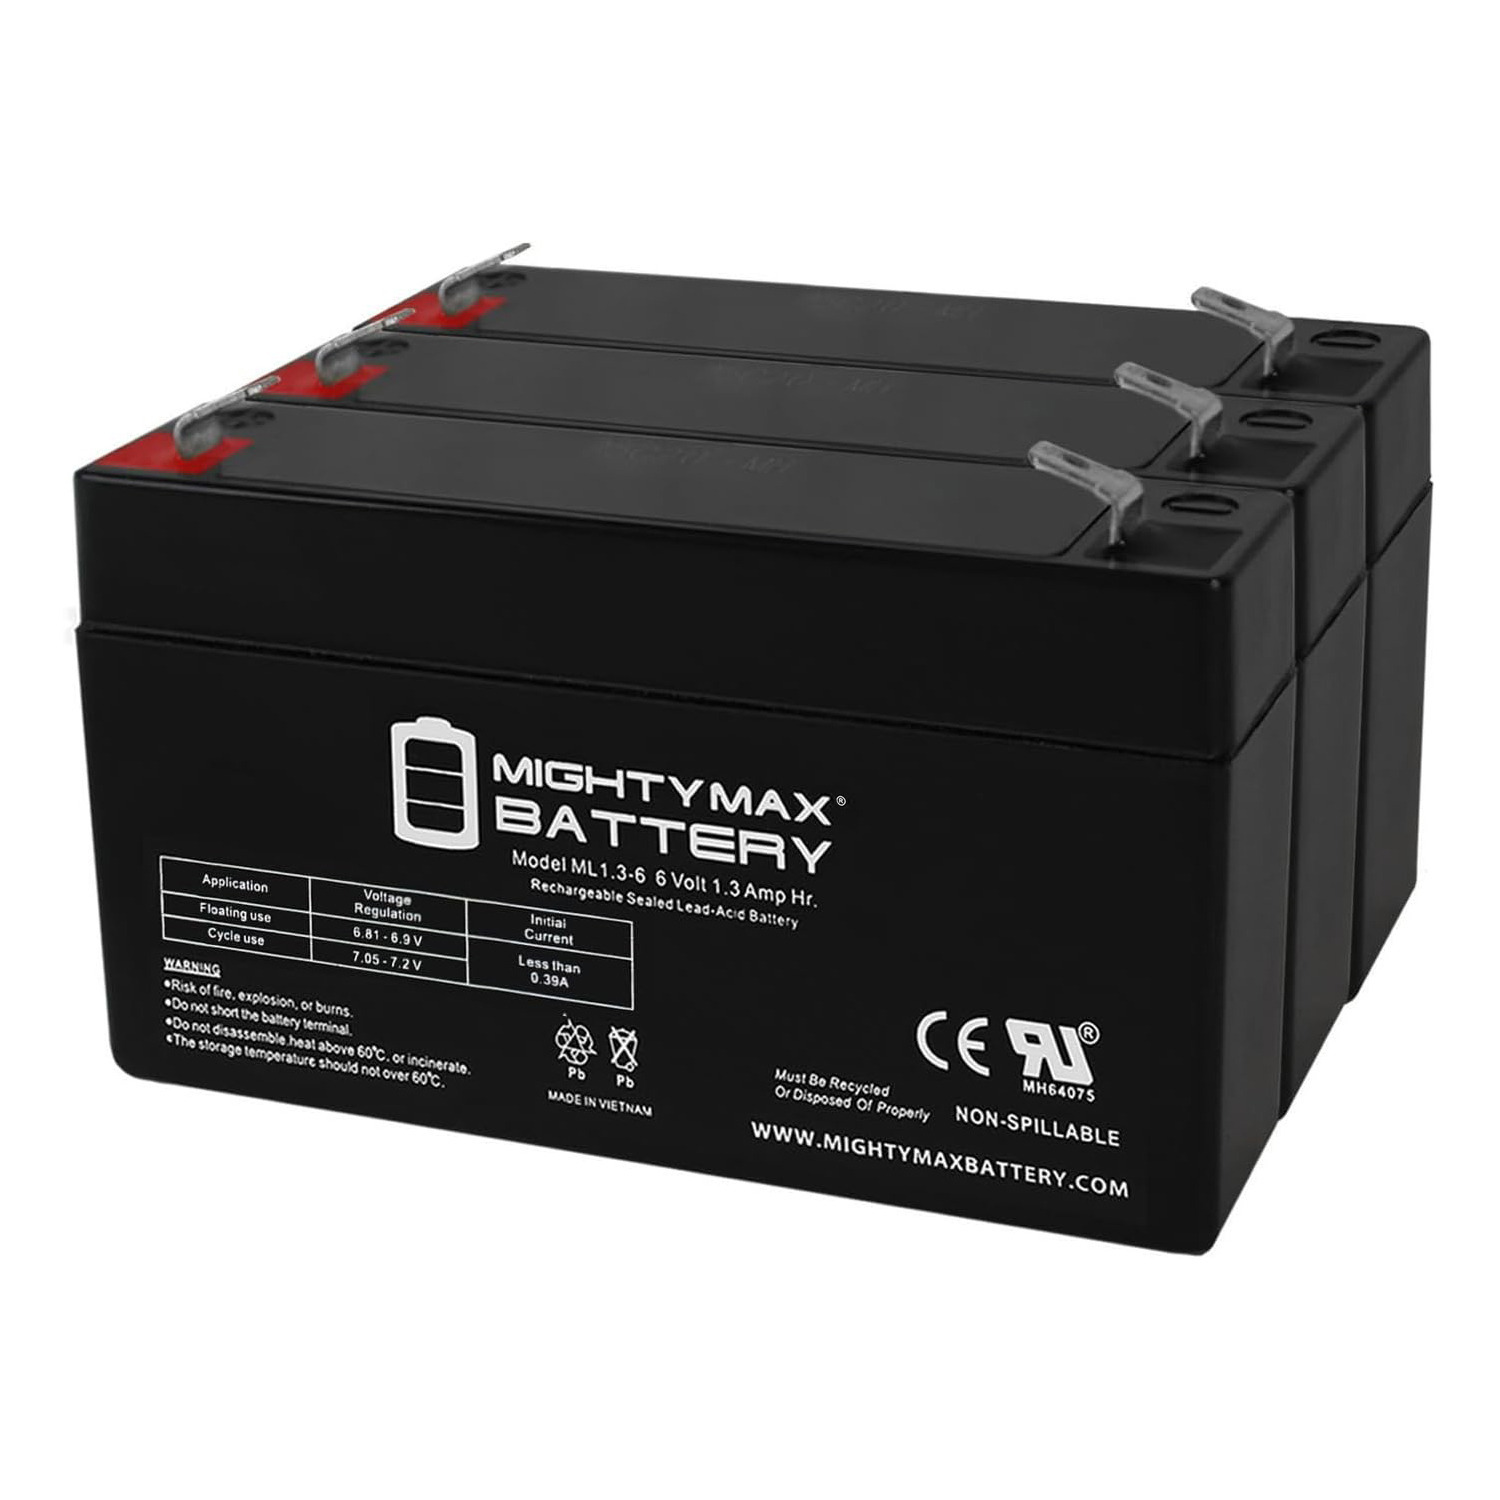 6V 1.3Ah Sonnenschein CR613 Emergency Light Battery - 3 Pack